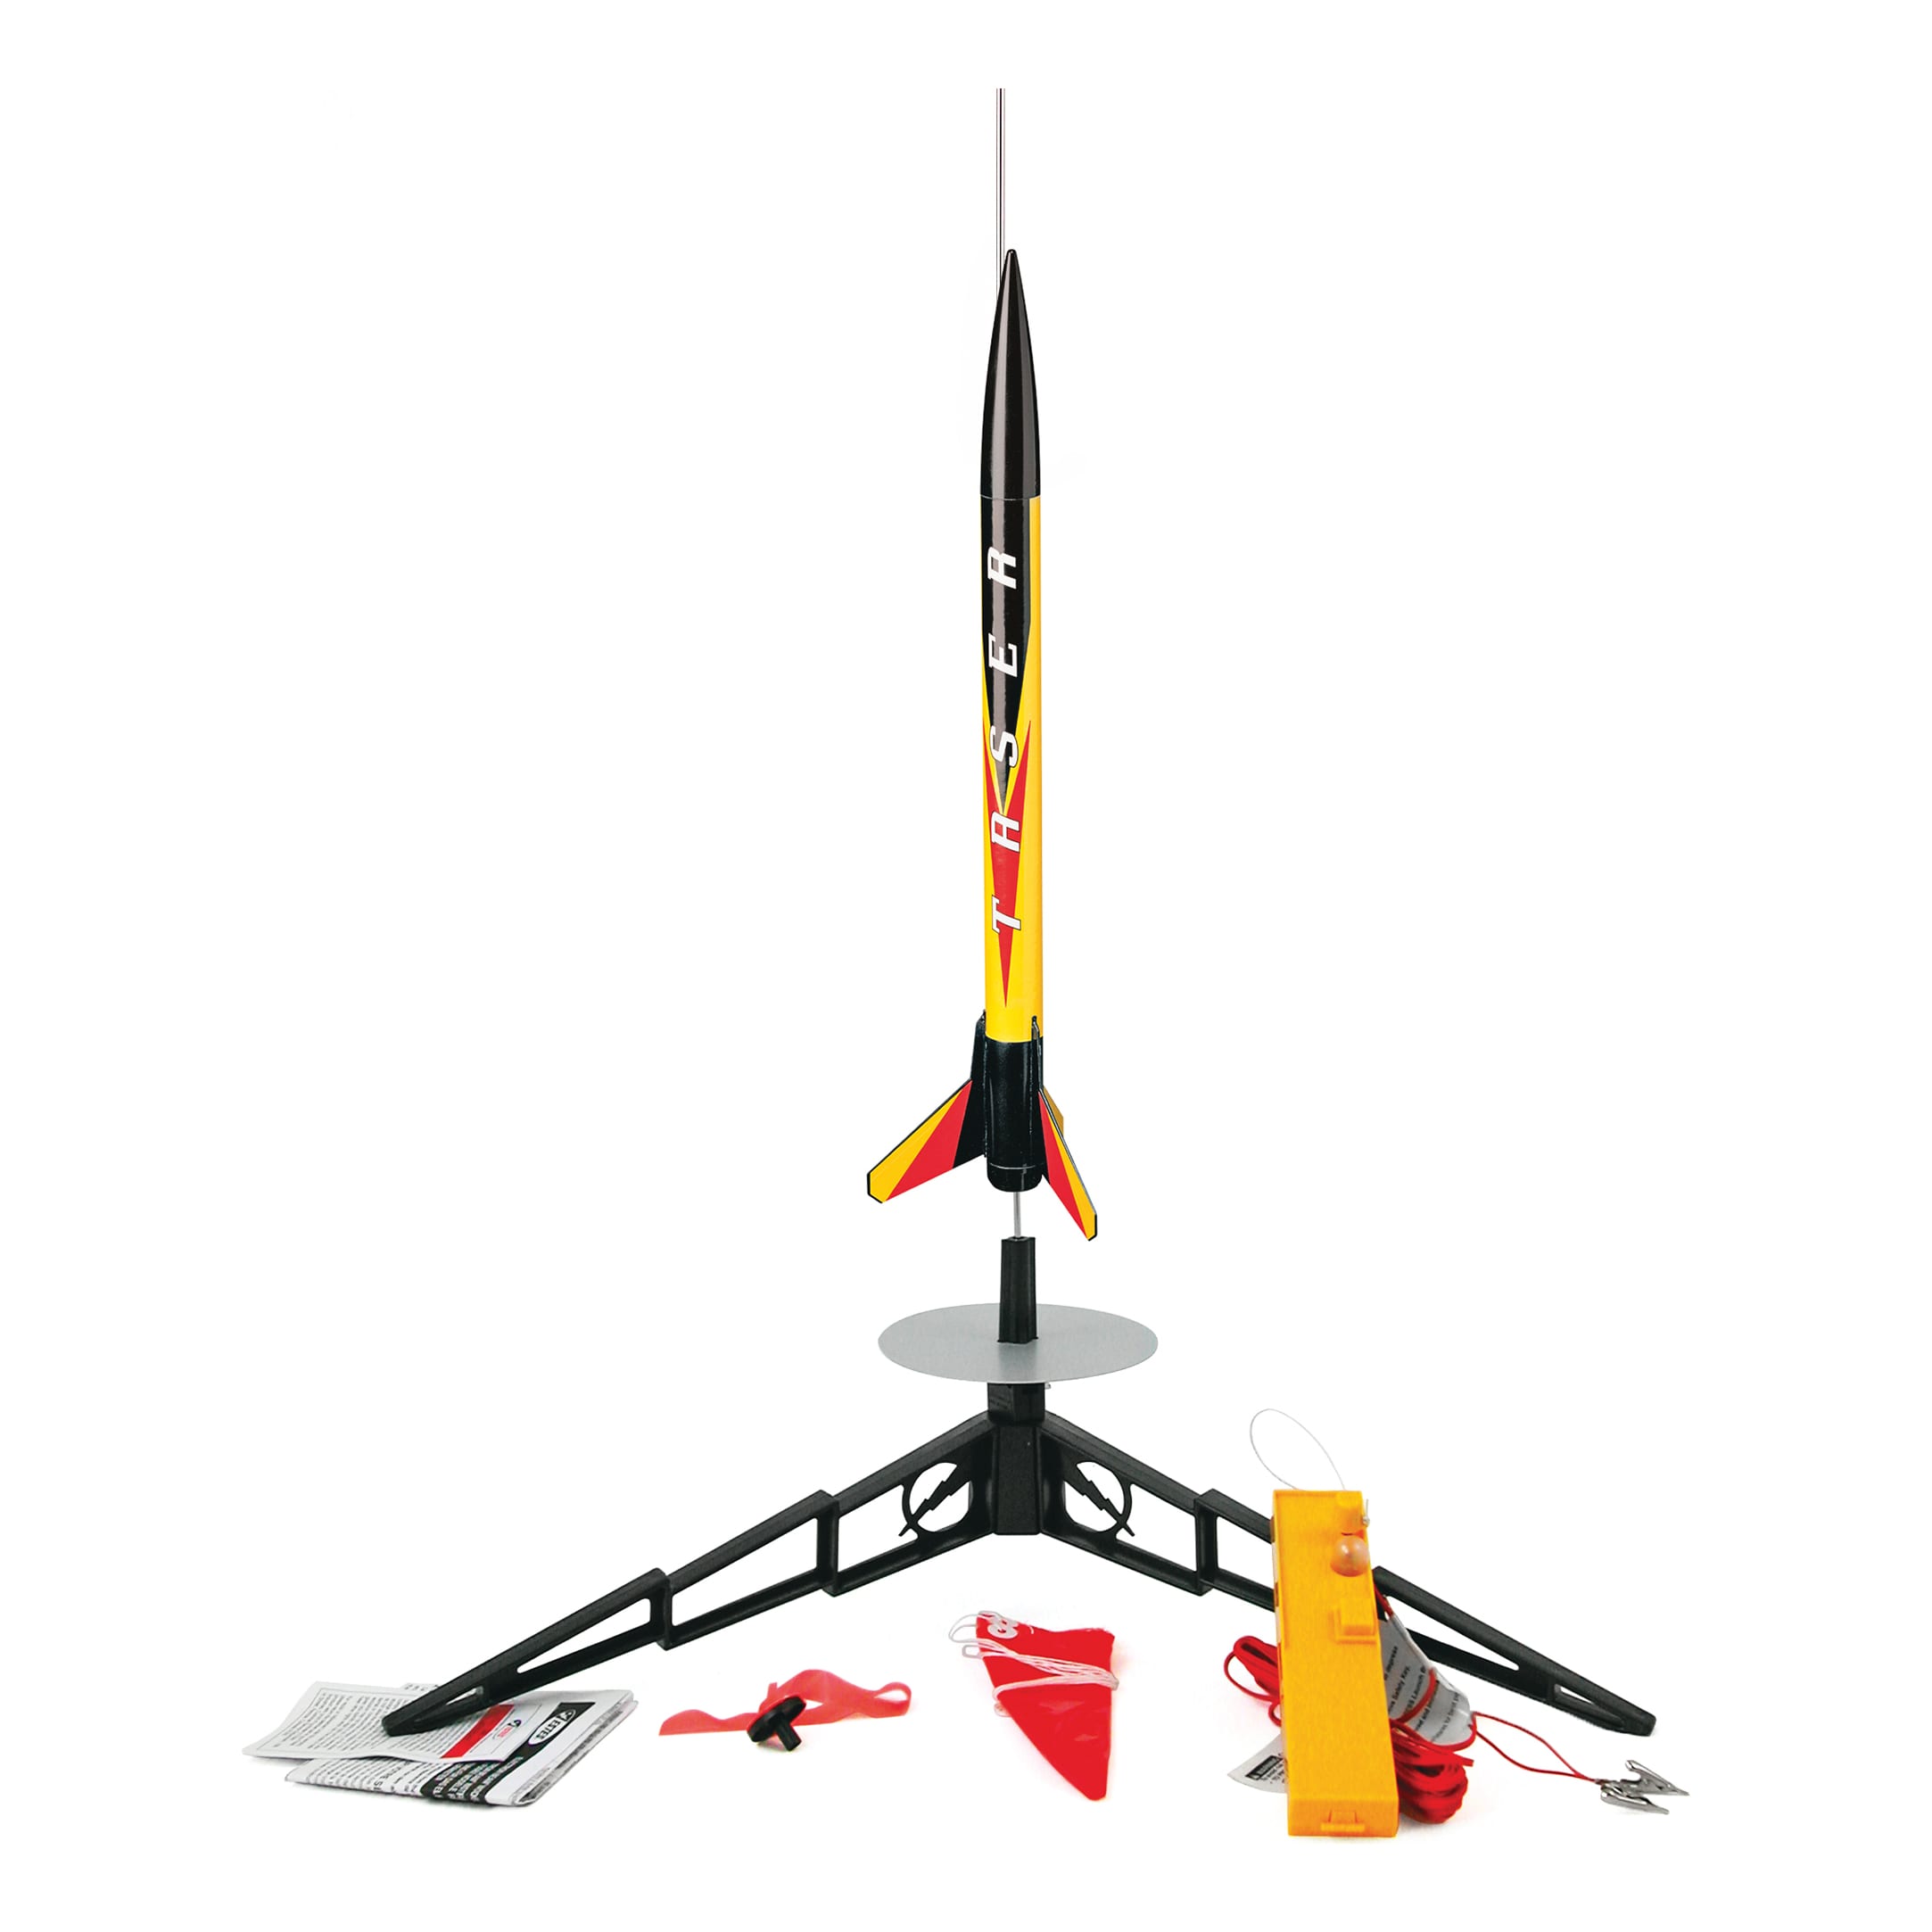 Estes Taser Rocket Launch Set